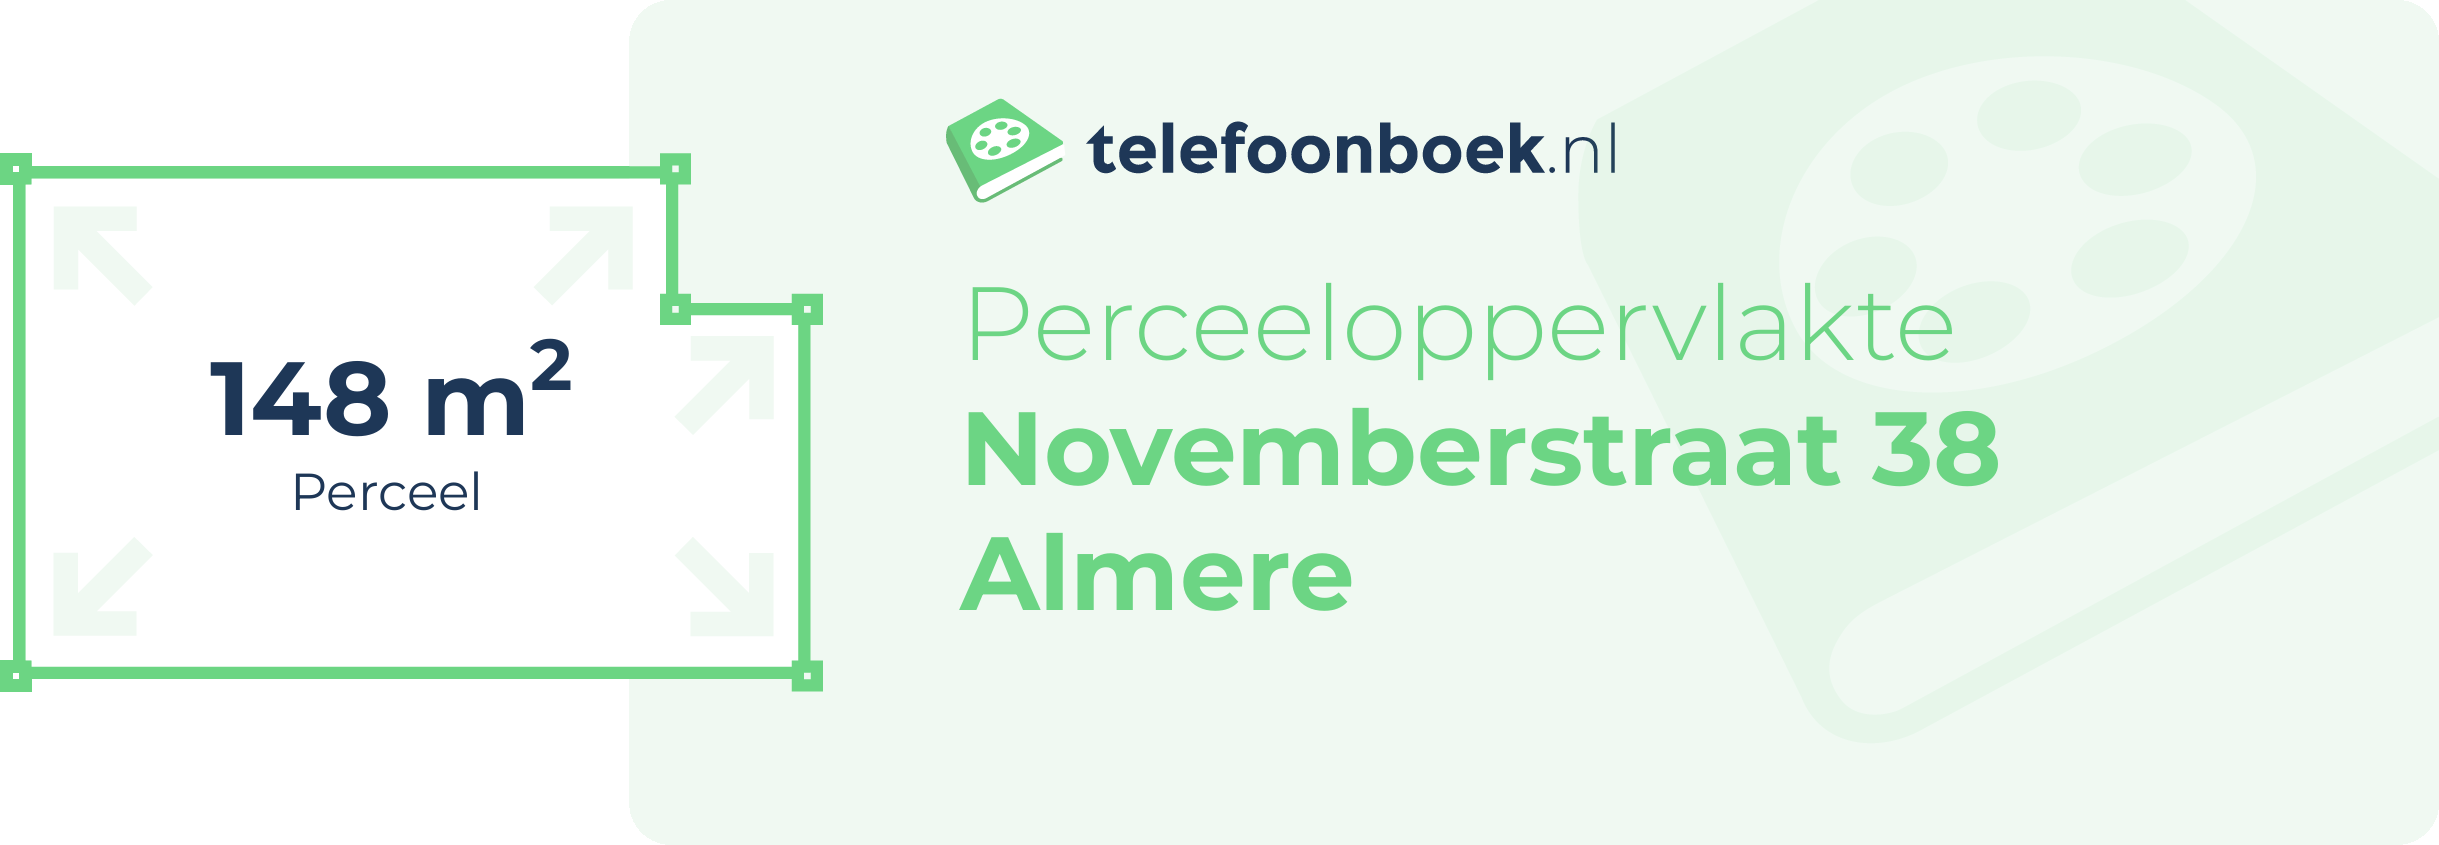 Perceeloppervlakte Novemberstraat 38 Almere